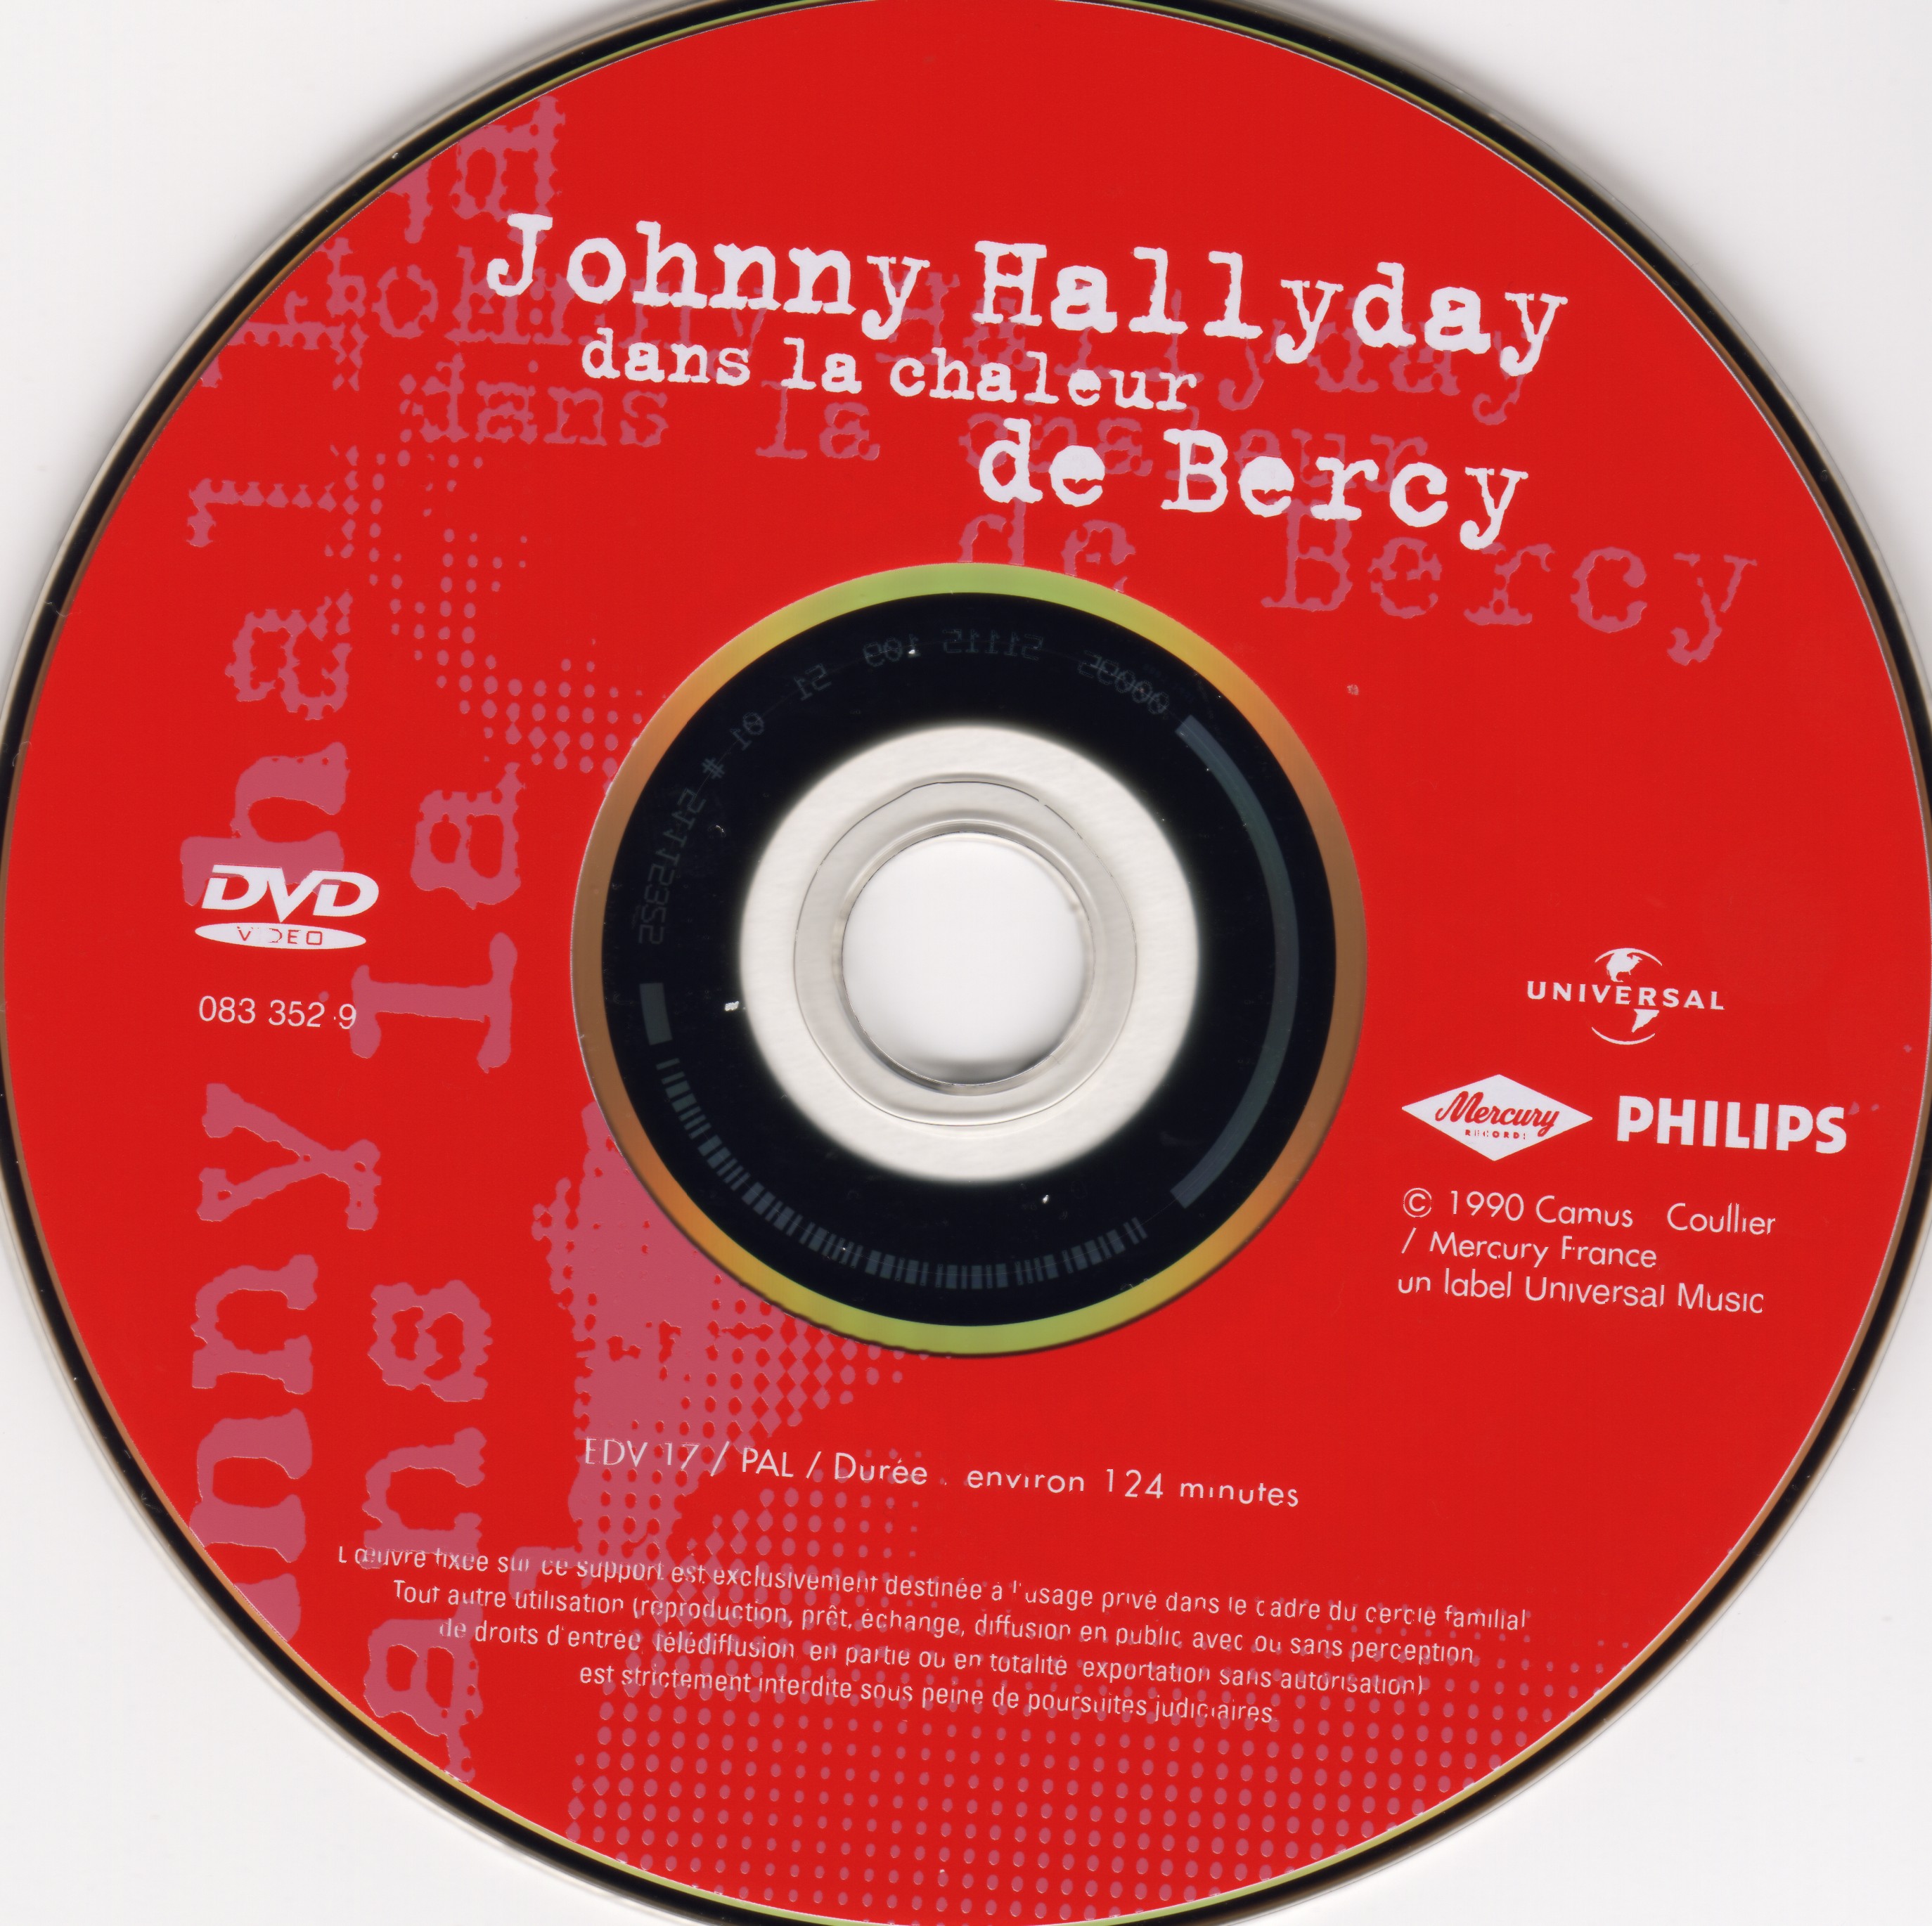 Johnny Hallyday - Dans la chaleur de Bercy